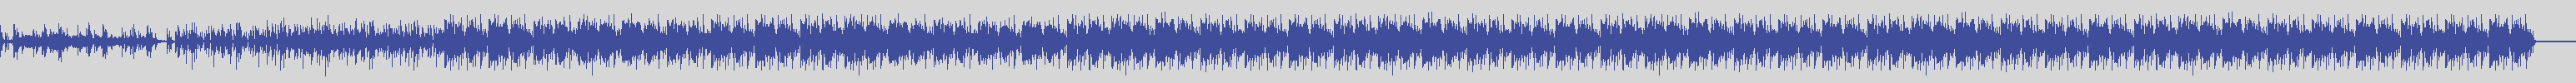 noclouds_chillout [NOC141] Vario Molante - Opportunamente [Original Mix] audio wave form